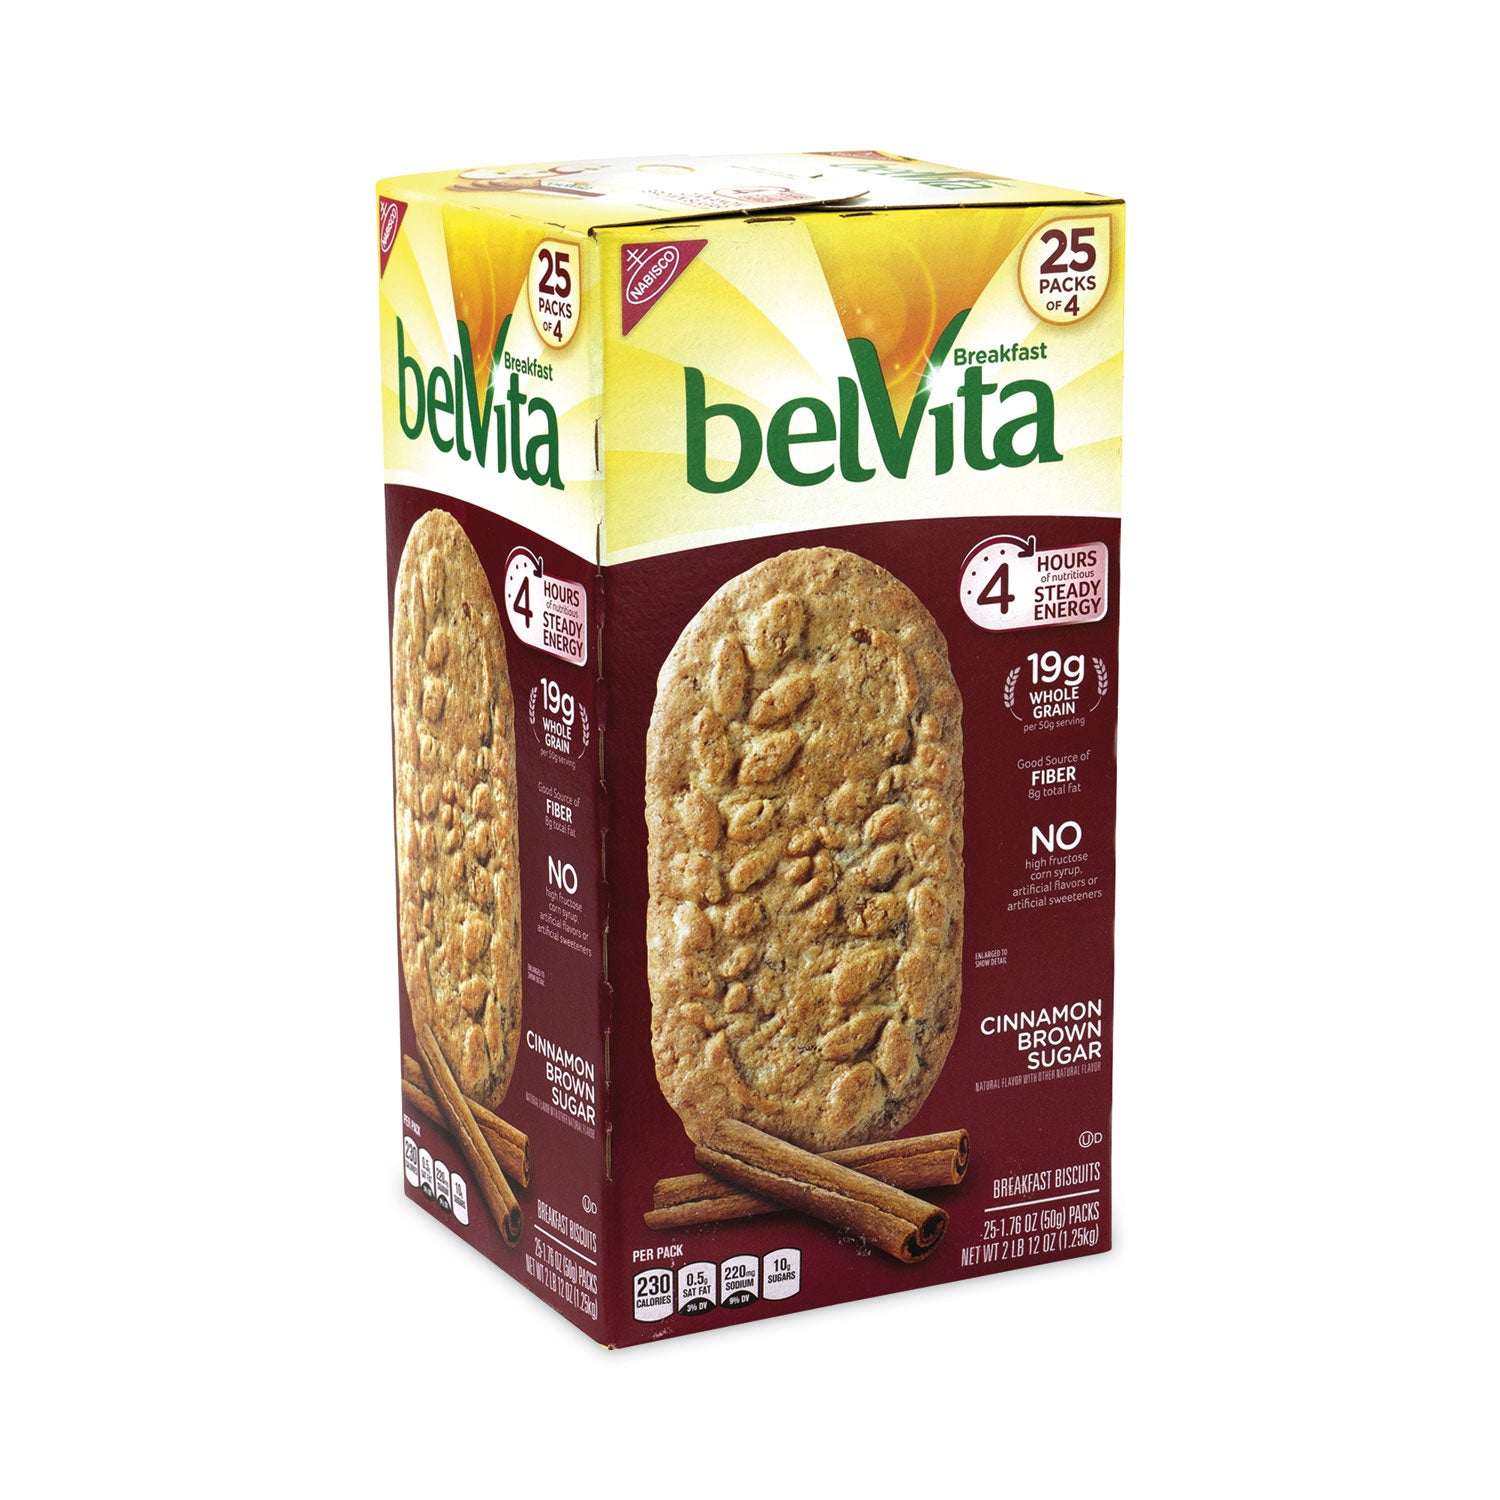 belvita-breakfast-biscuits-cinnamon-brown-sugar-176-oz-pack-25-packs-carton-ships-in-1-3-business-days_grr22000507 - 3